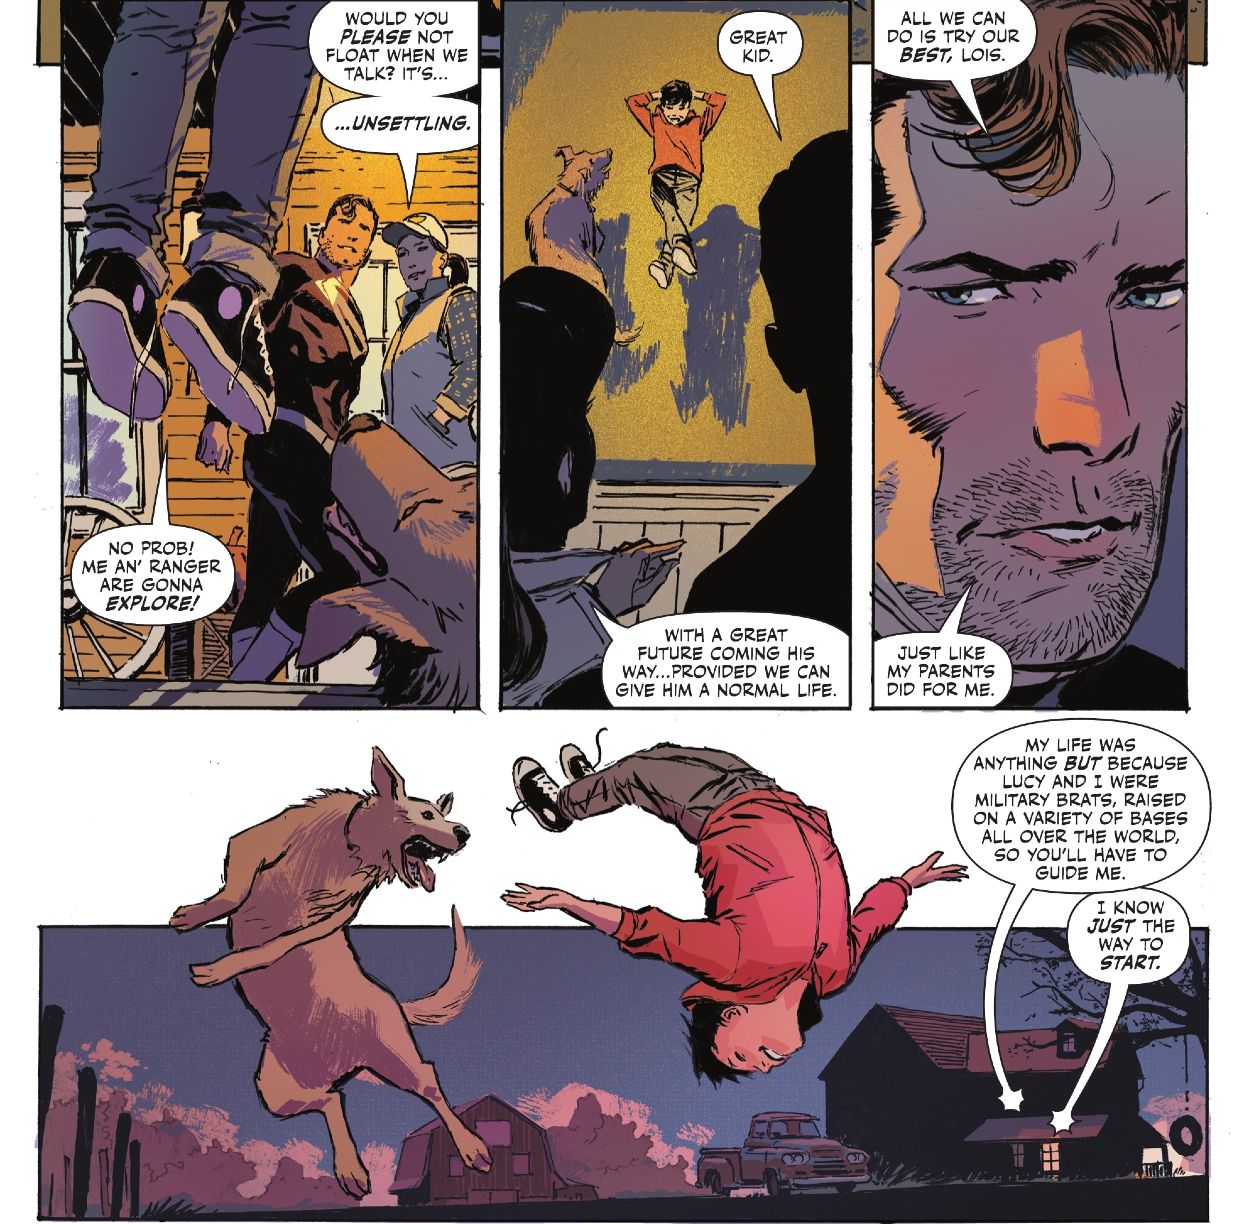 Action Comics #1051 Jon Kent